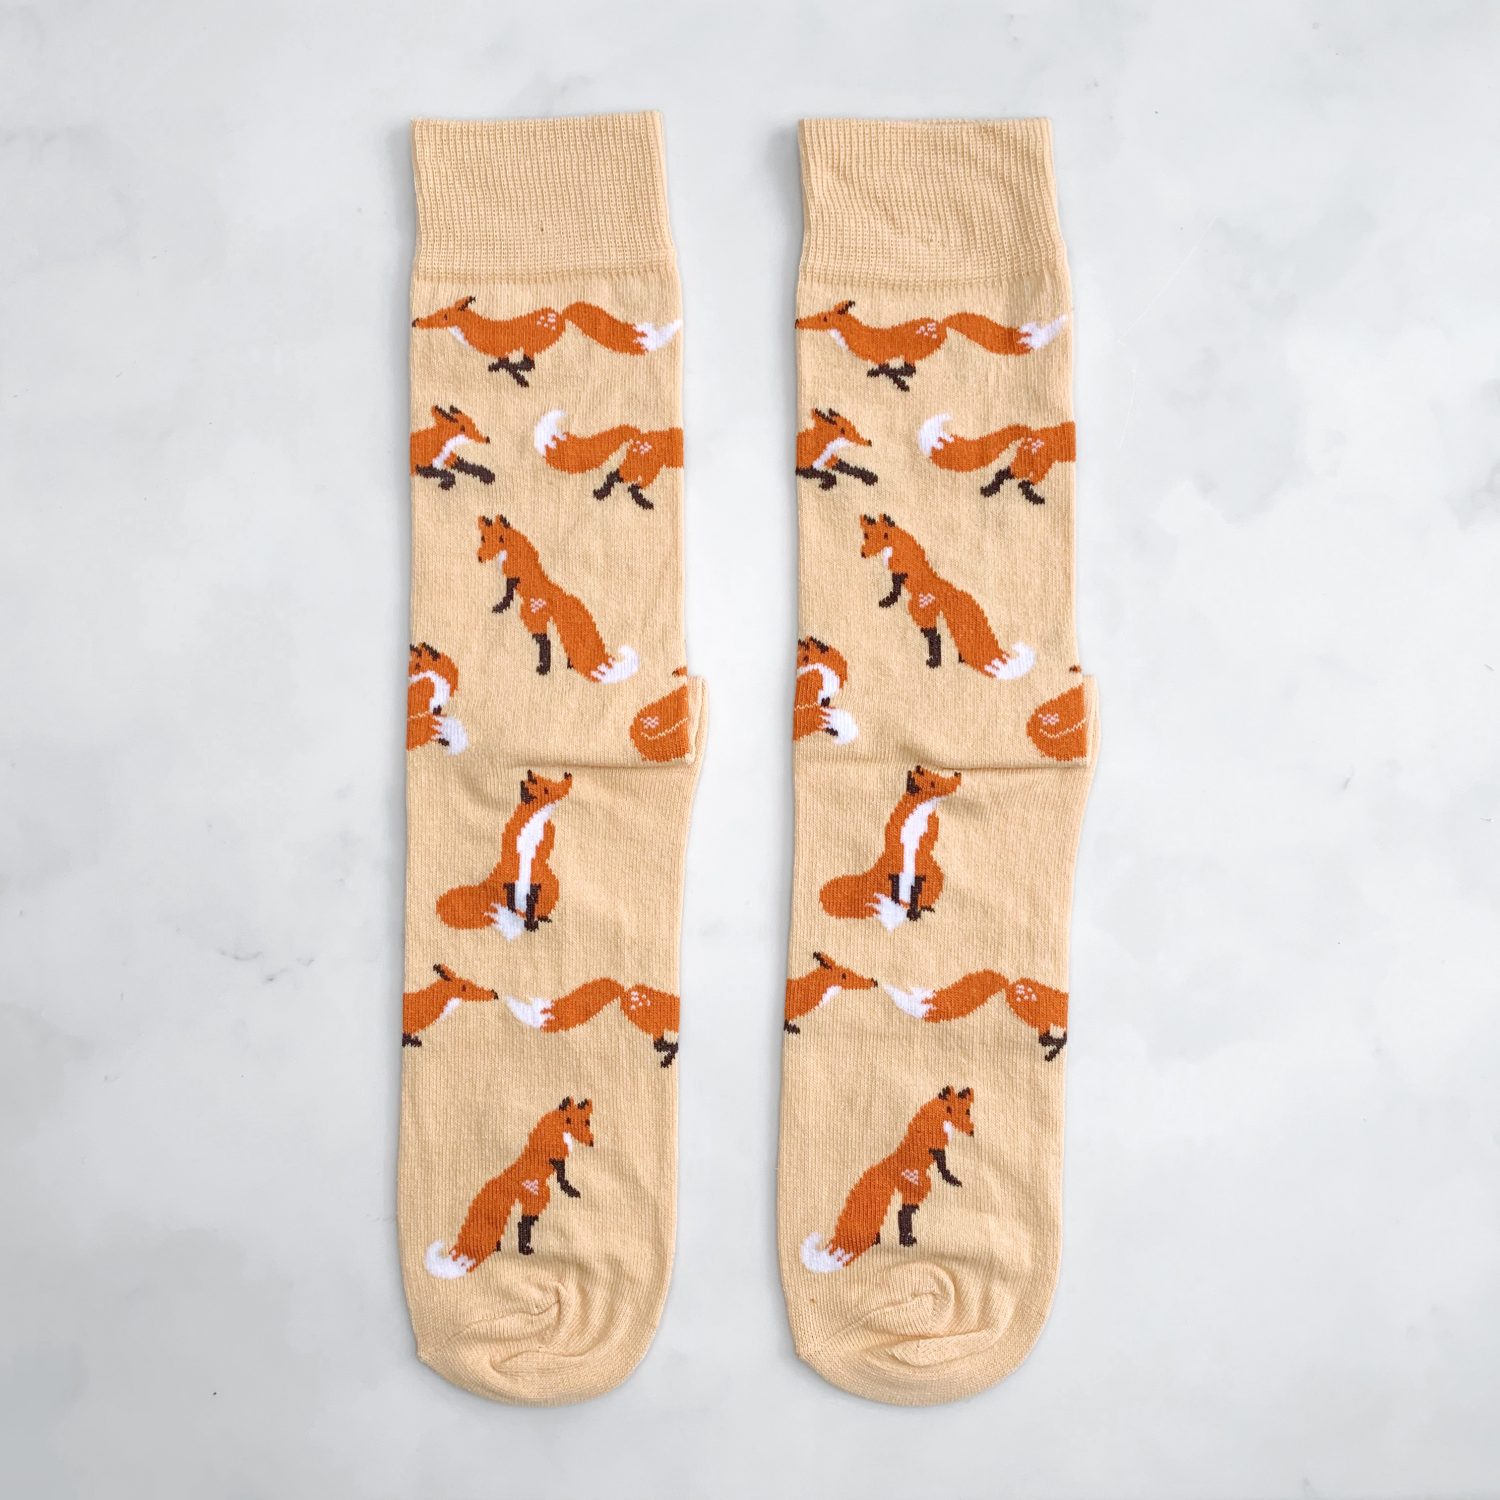 Quinn the Fox socks